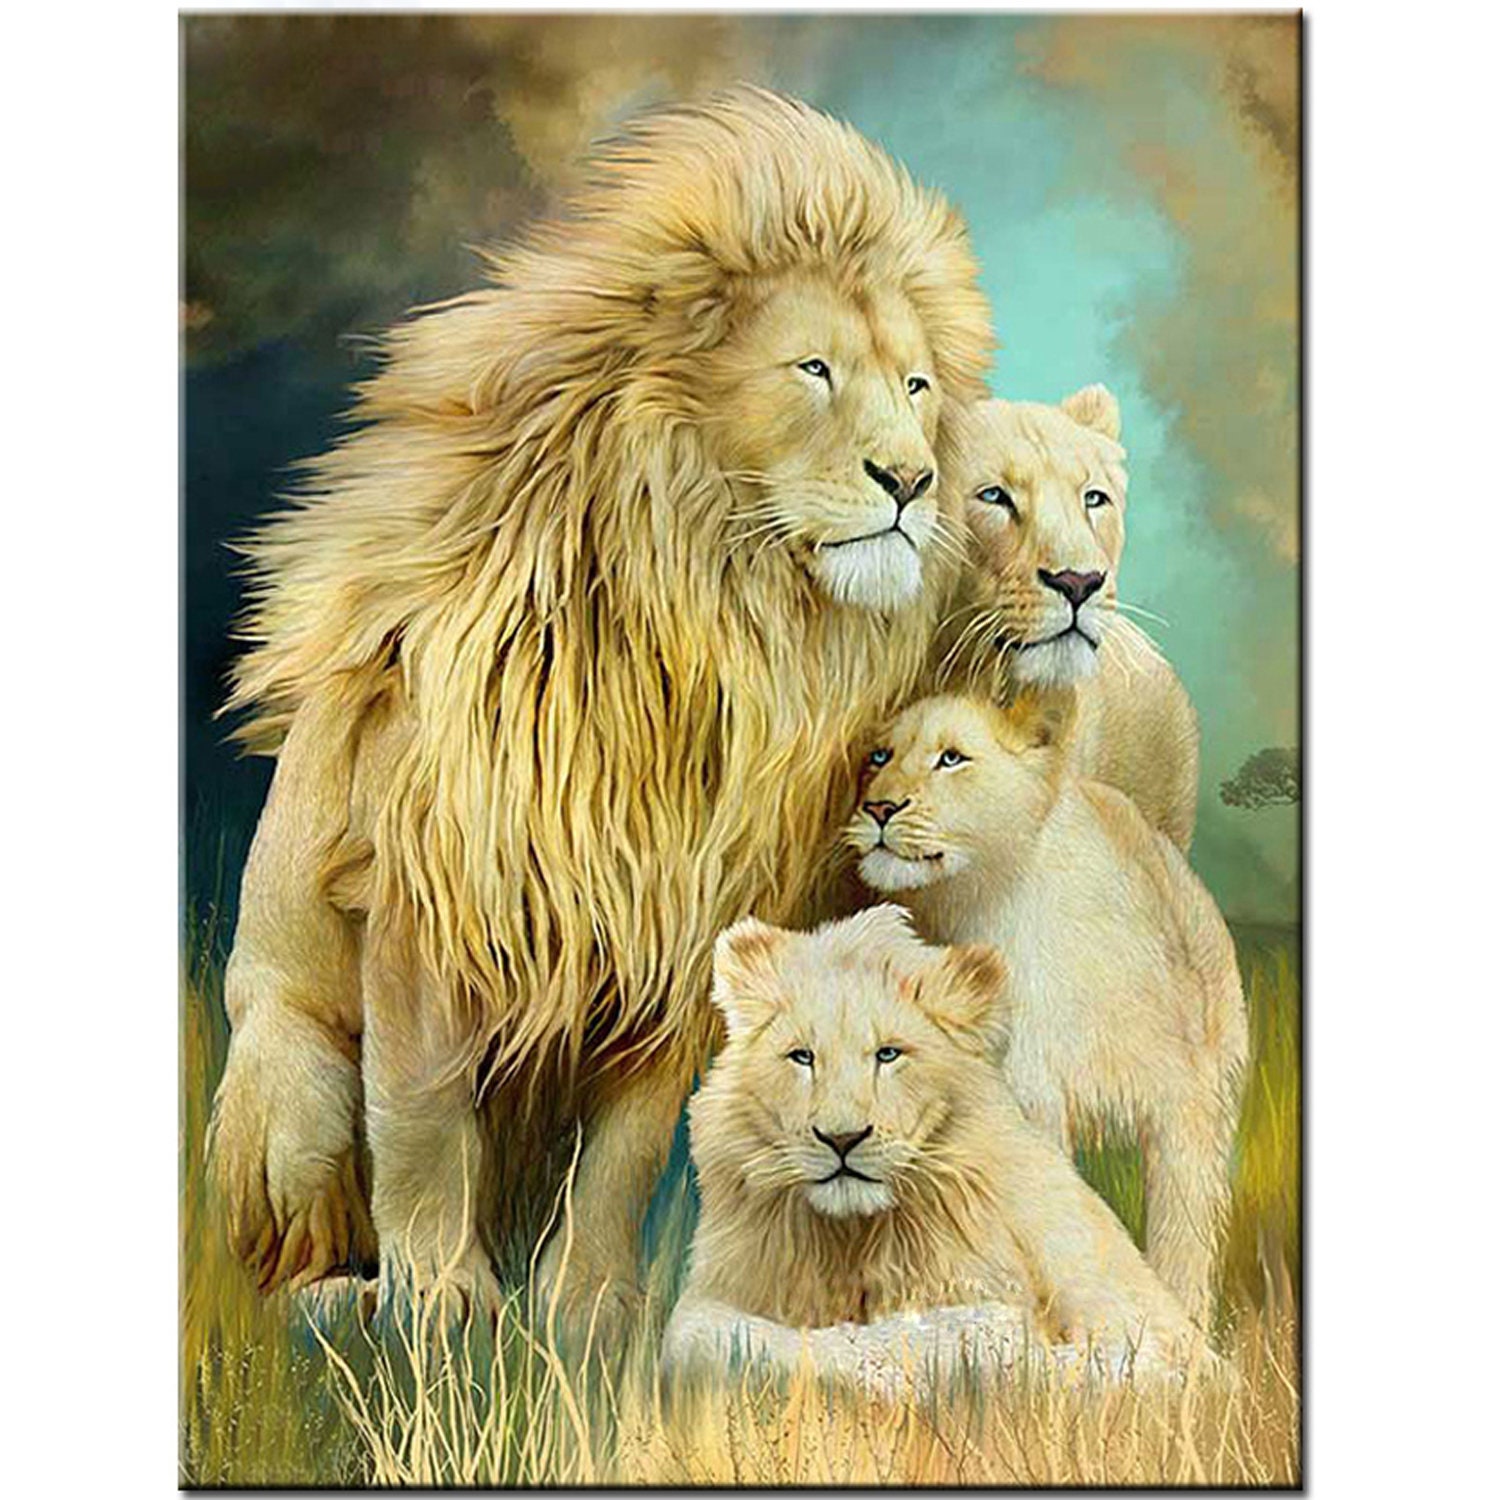 Lion Family Animals 5D DIY Full Drill Diamond Painting Cross Stitch Decor